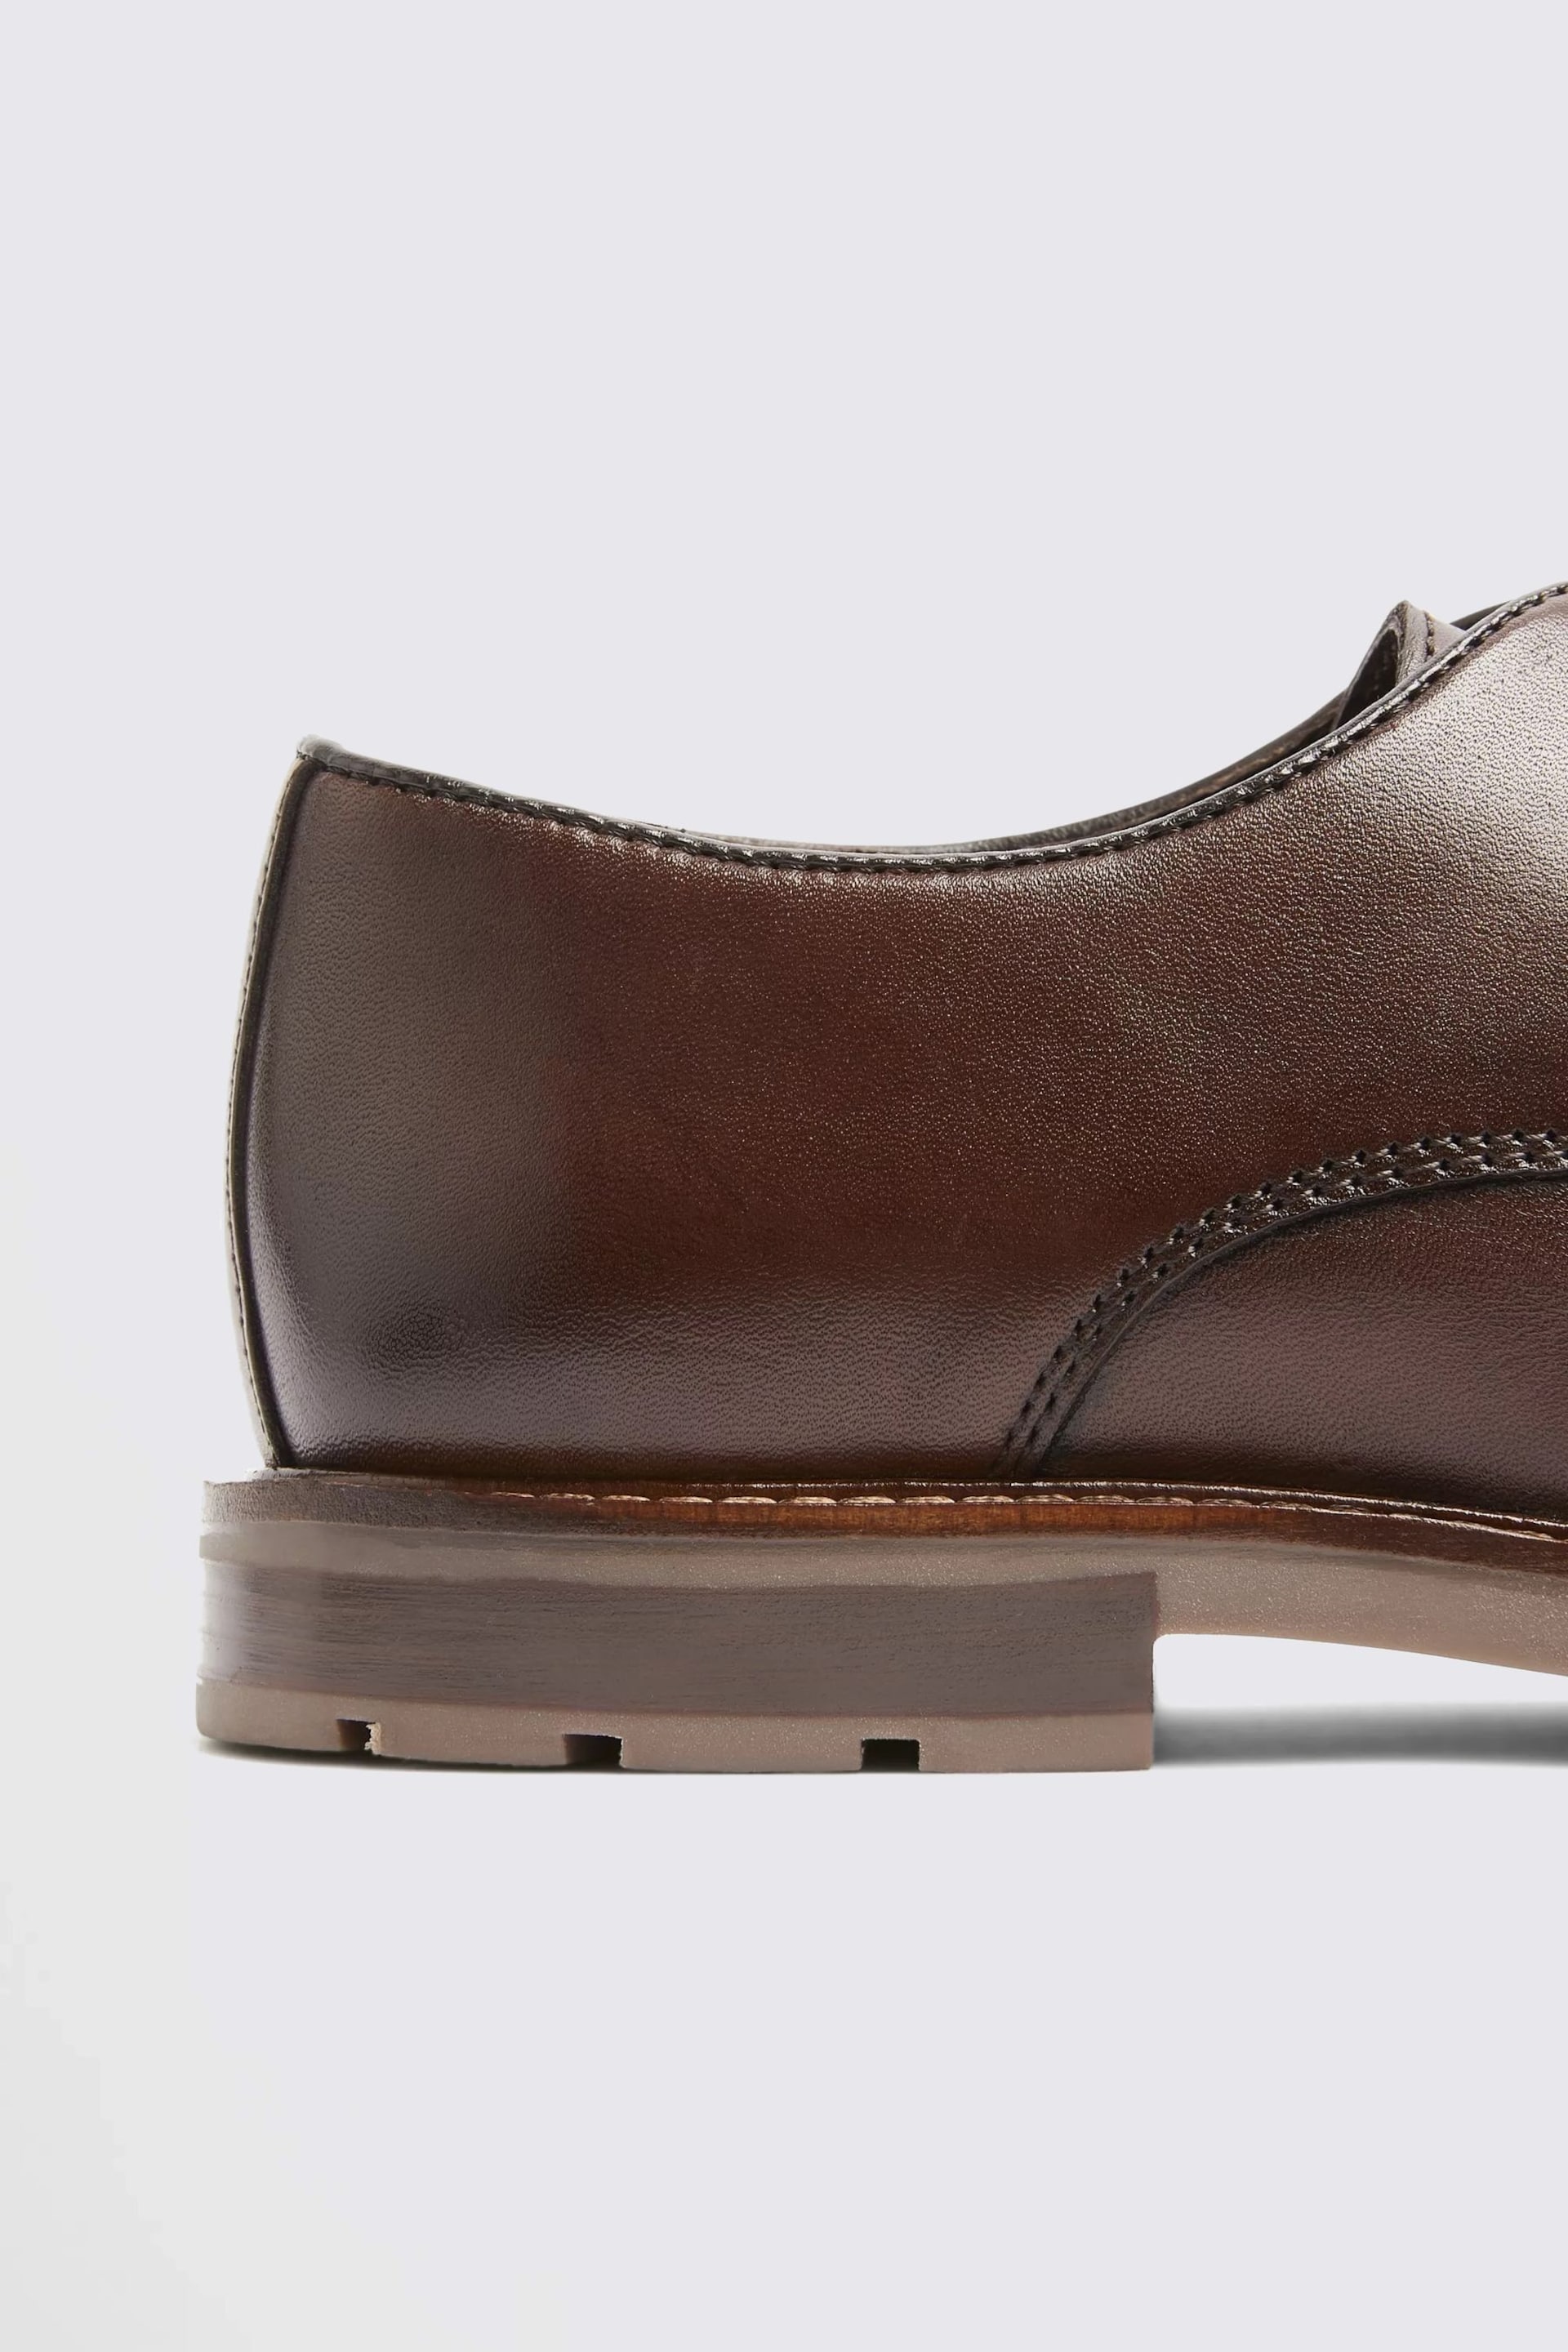 MOSS Brown Rogue Plain John Carter Derby Shoes - Image 4 of 4